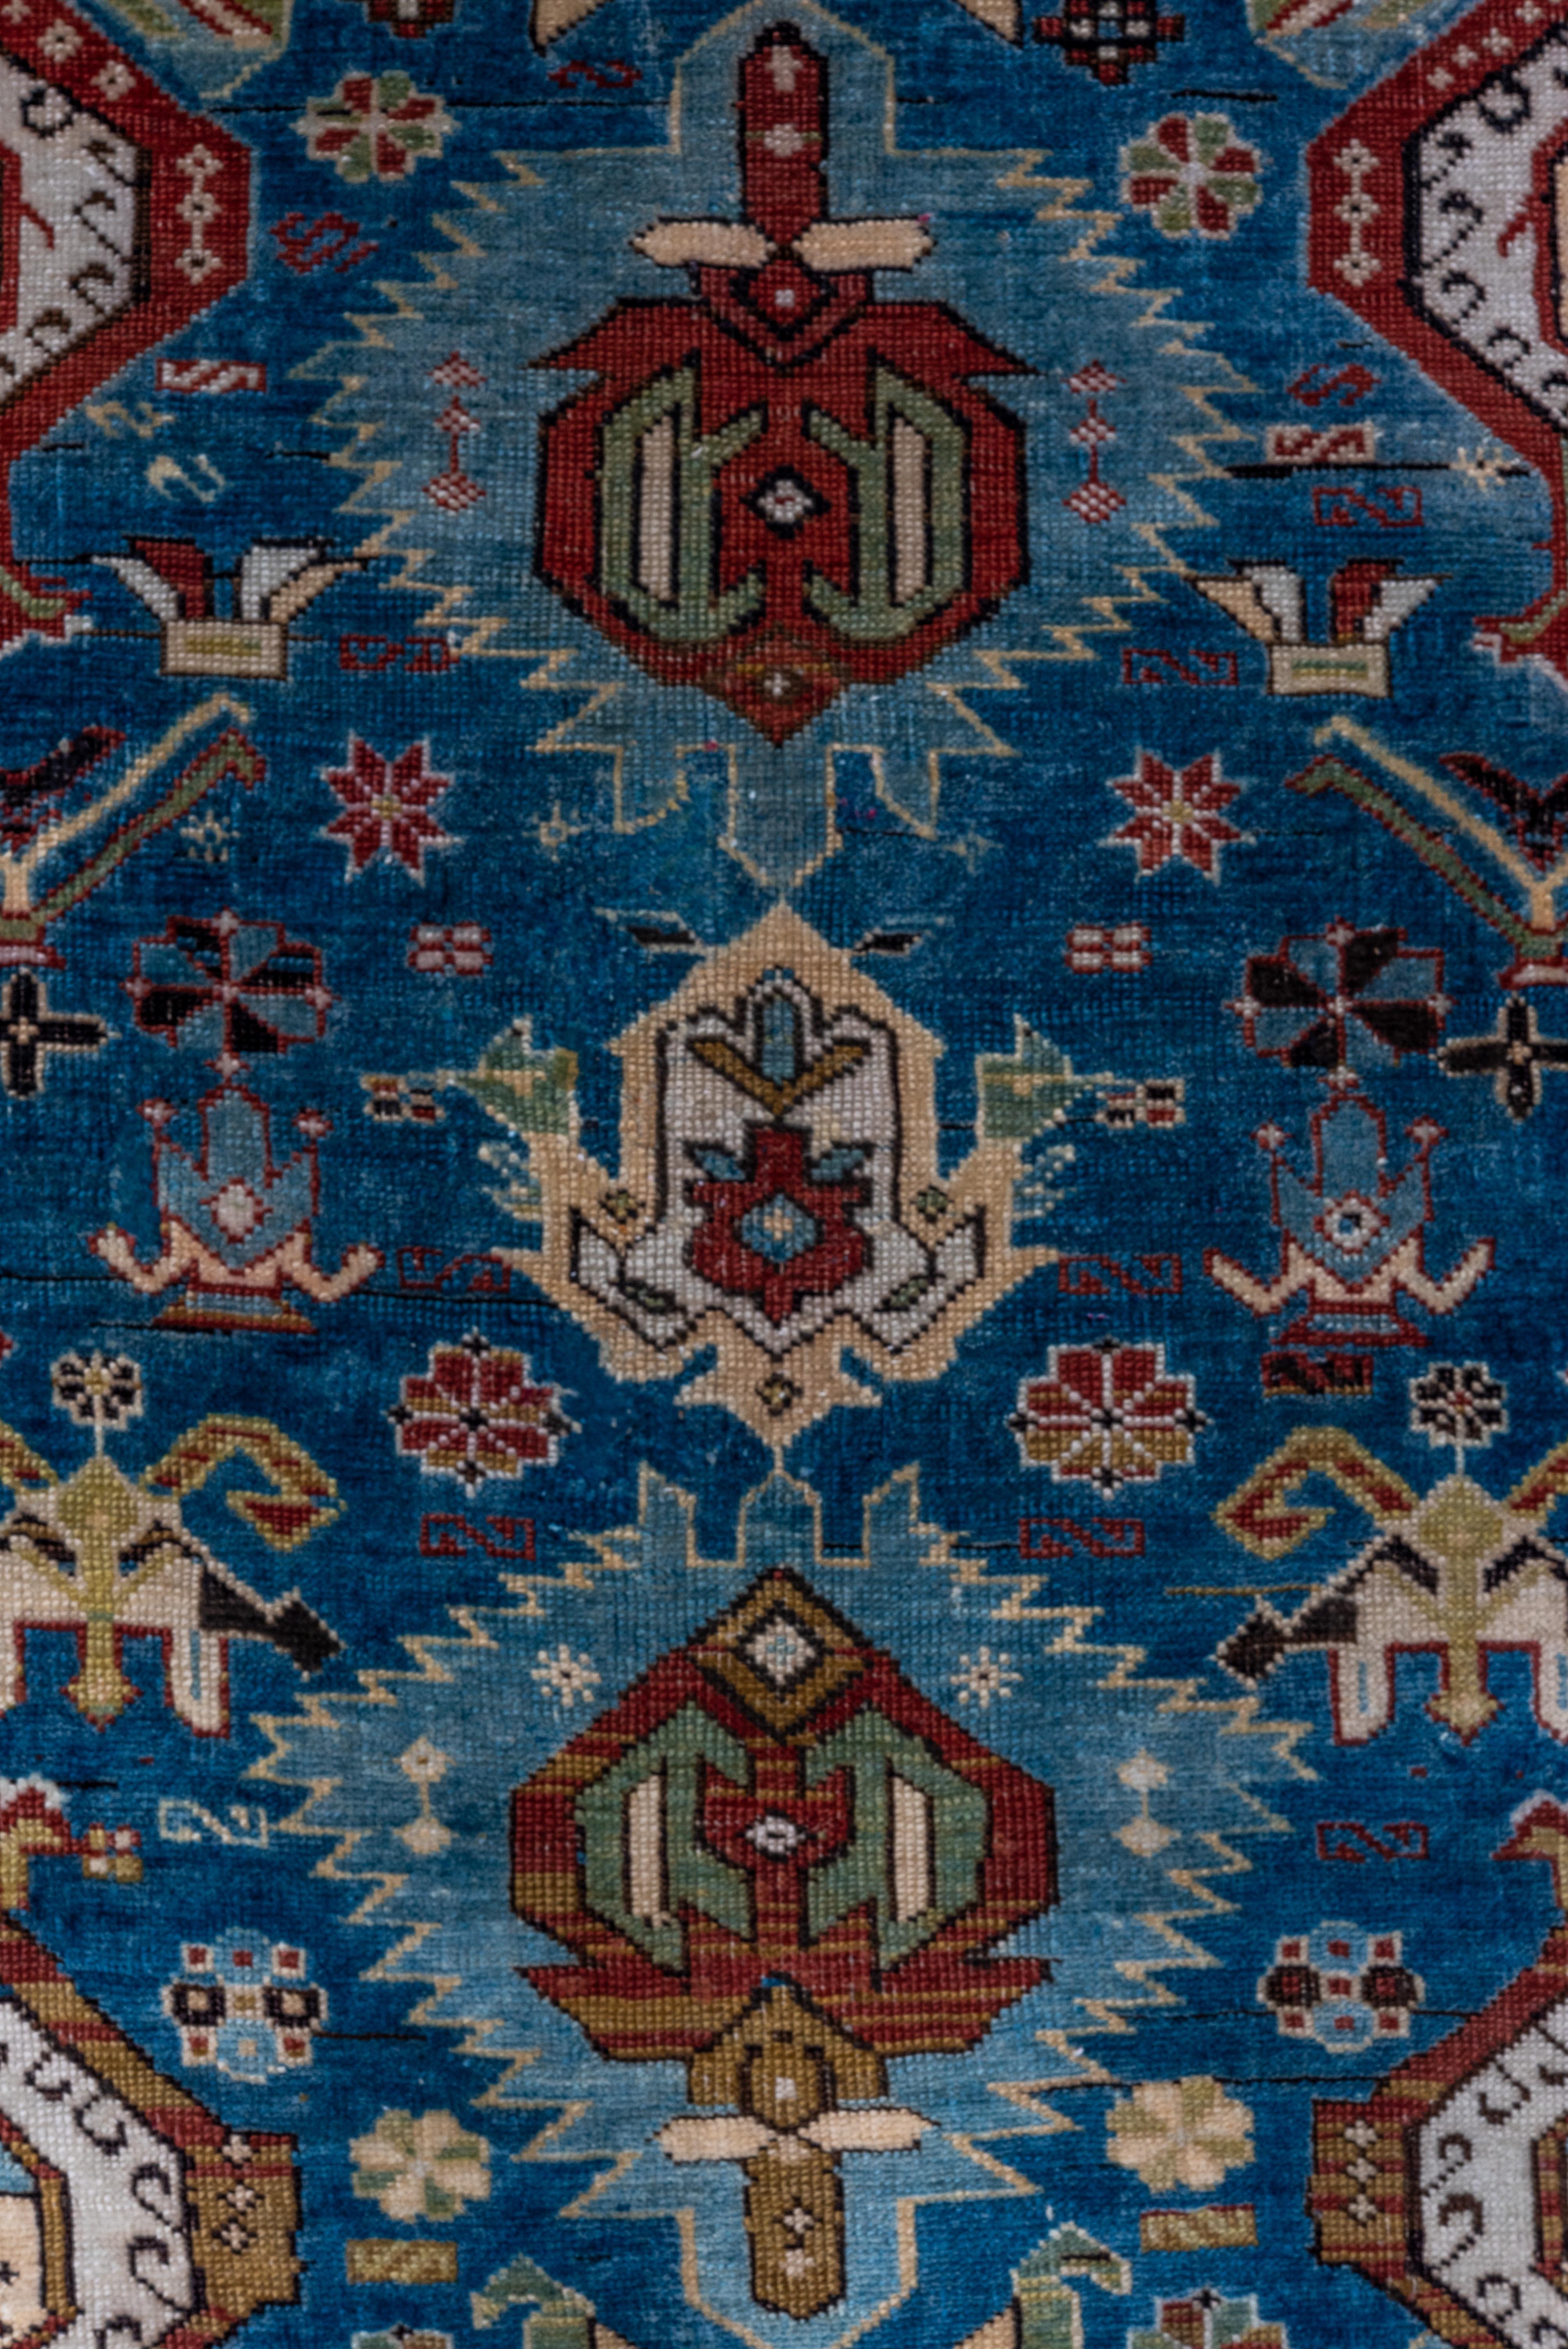 Hand-Woven Rare and Fine Antique Caucasian Kuba Area Rug, Mint Condition, Bright Blue Field For Sale